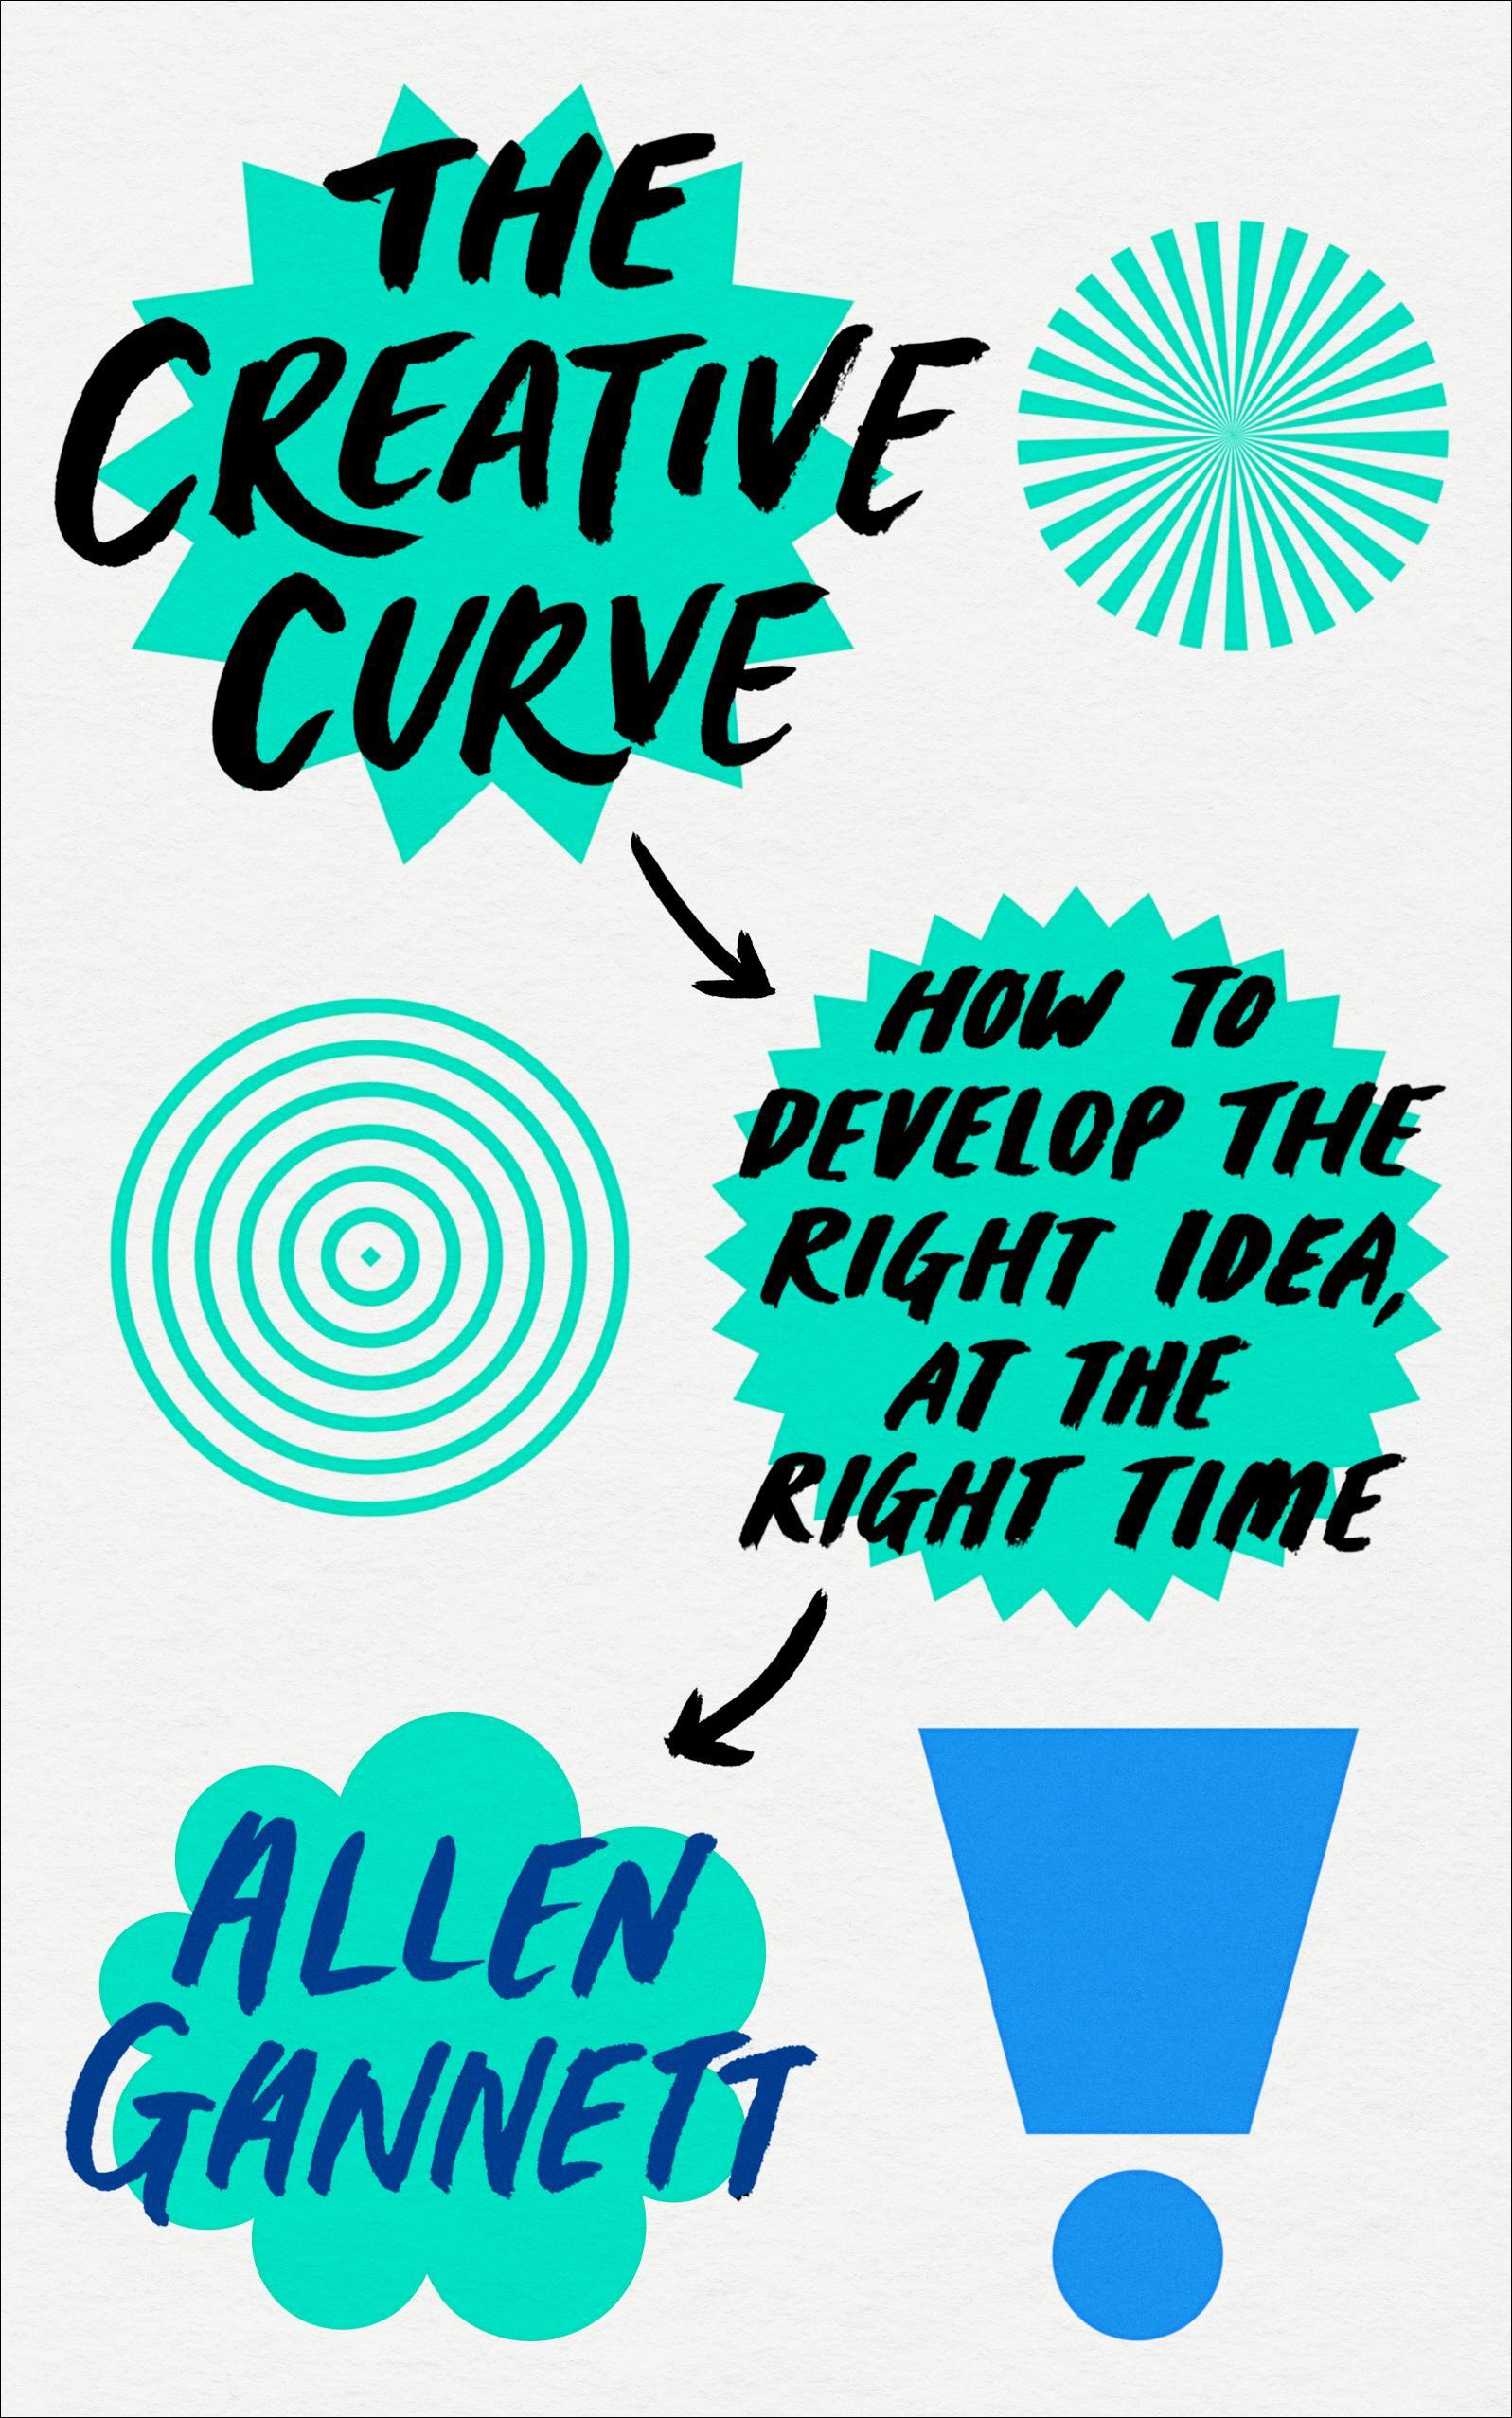 Creative Curve - Allen Gannett